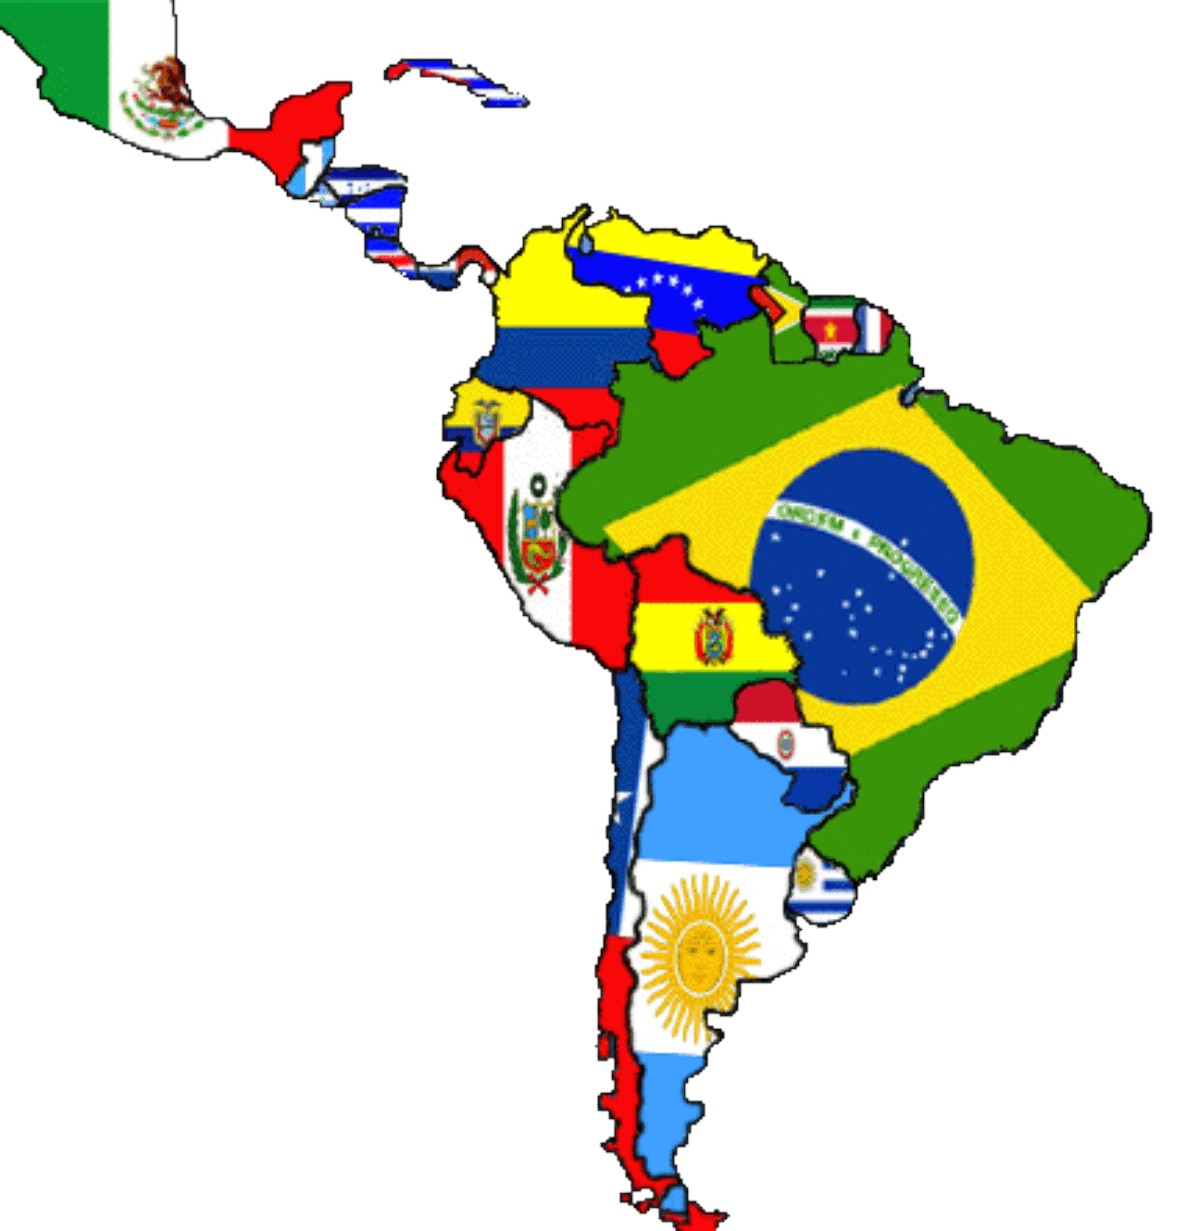 South american country. Латинская Америка. Латинская Америка Континент. Латинская Америка на карте. Символ Латинской Америки.